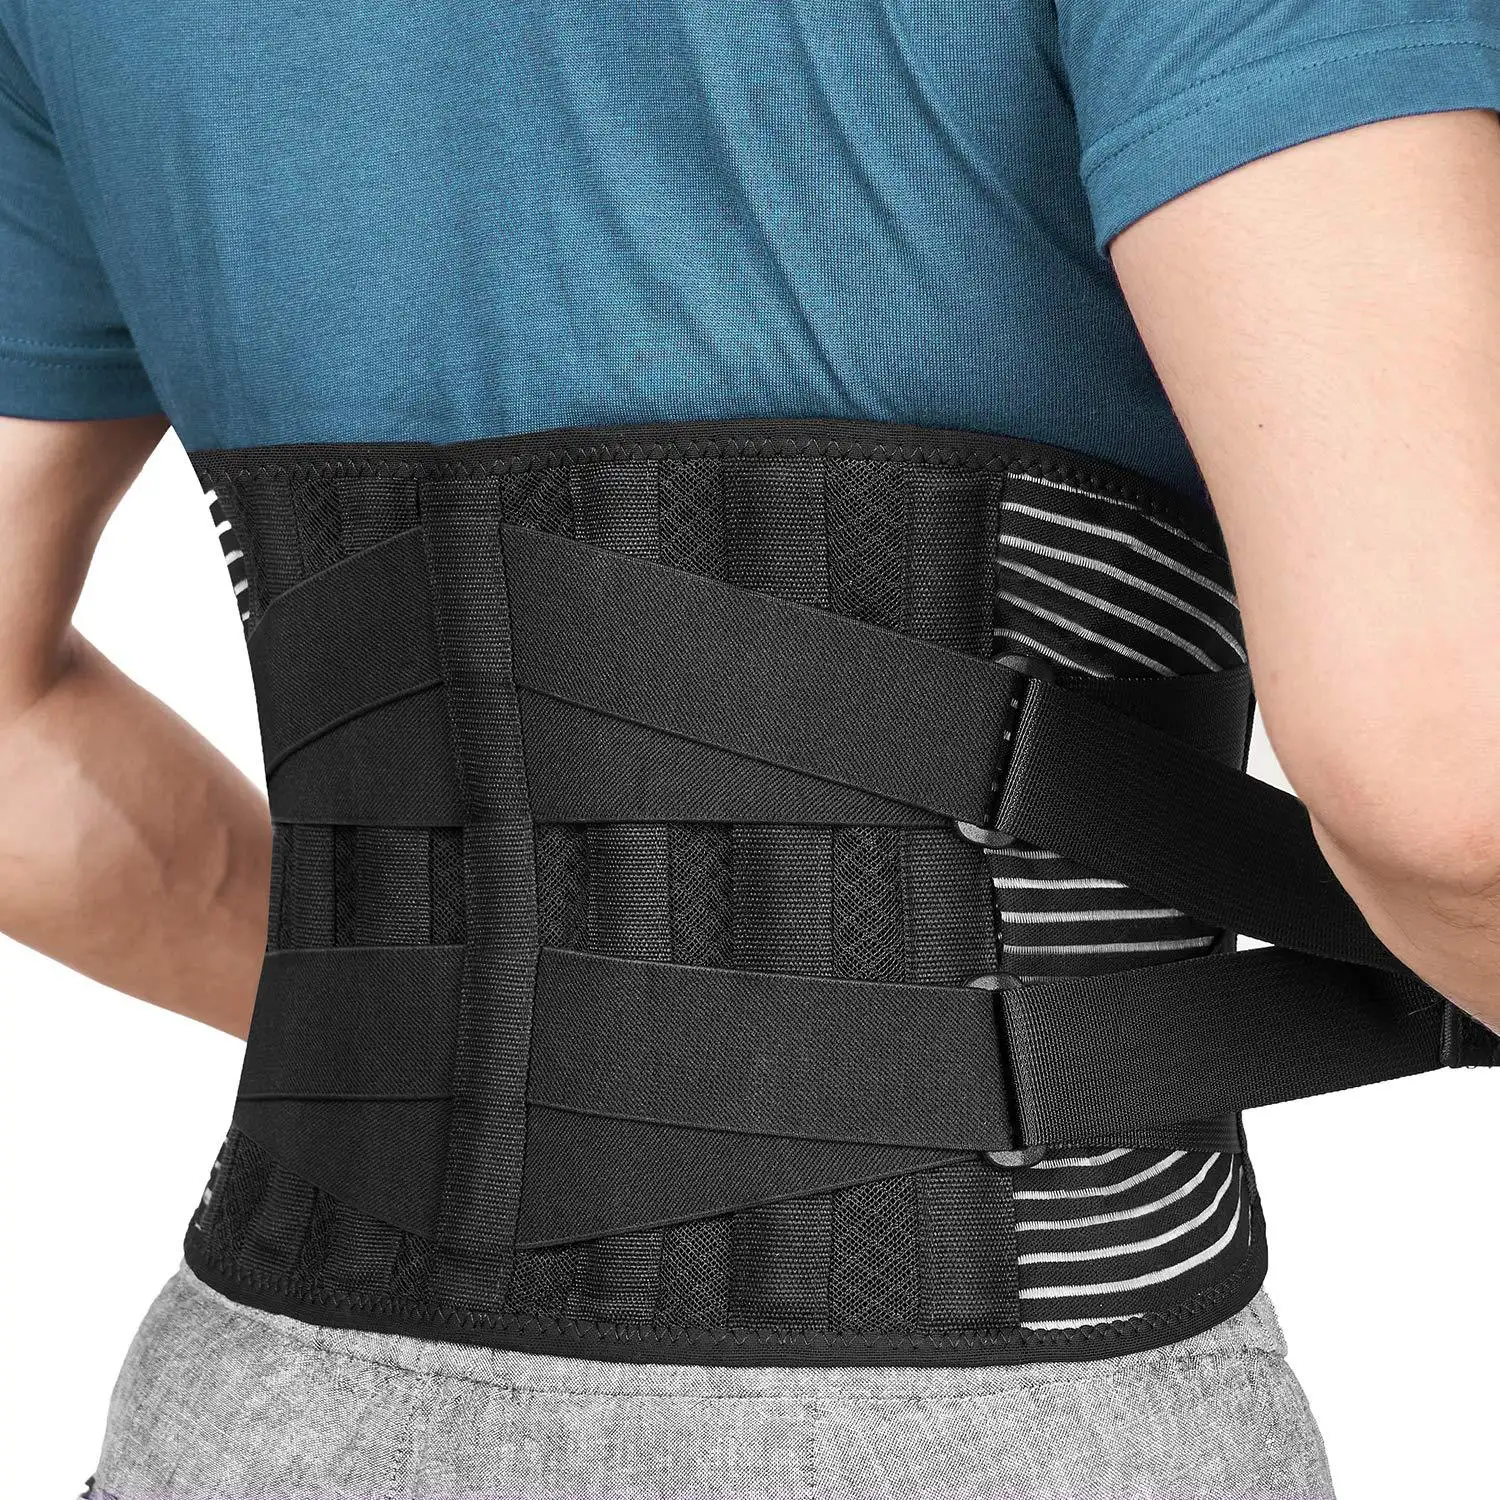 Amazon Custom Back Brace for Lower Back Pain Relief Medical Lumbar Back Support Belt for Men and Women